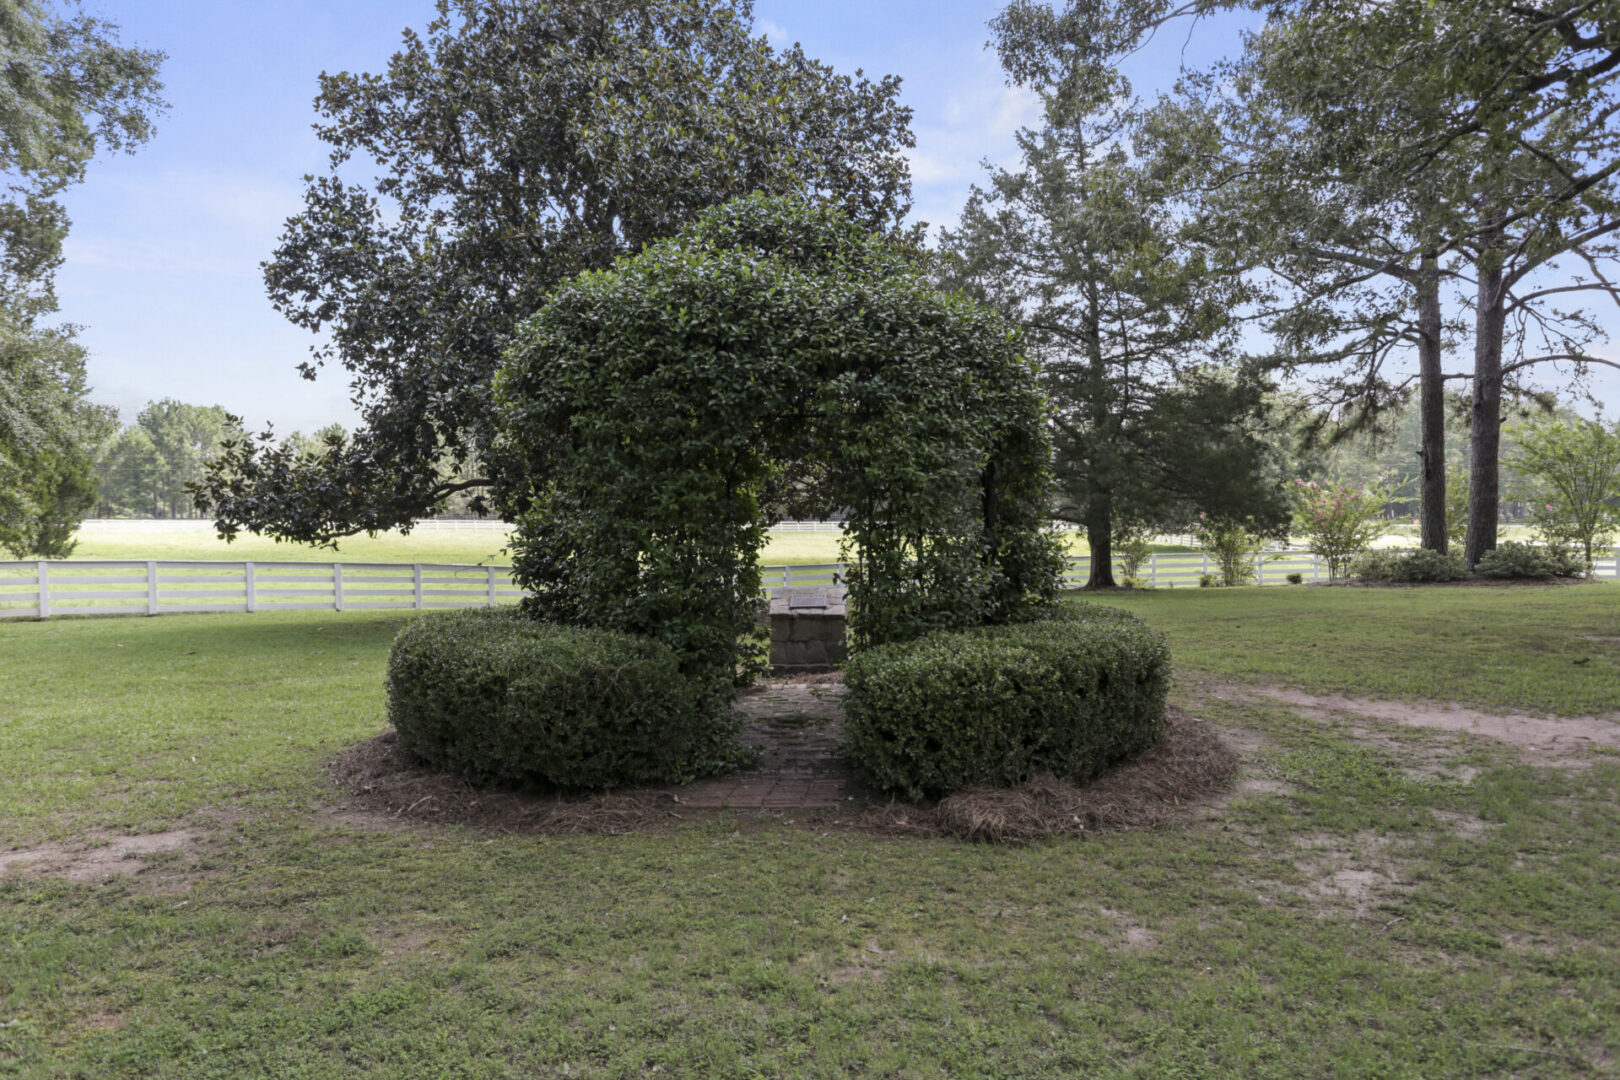 Tree archway for romantic photoshoot, events venue at Serenata Farm in Madison, GA